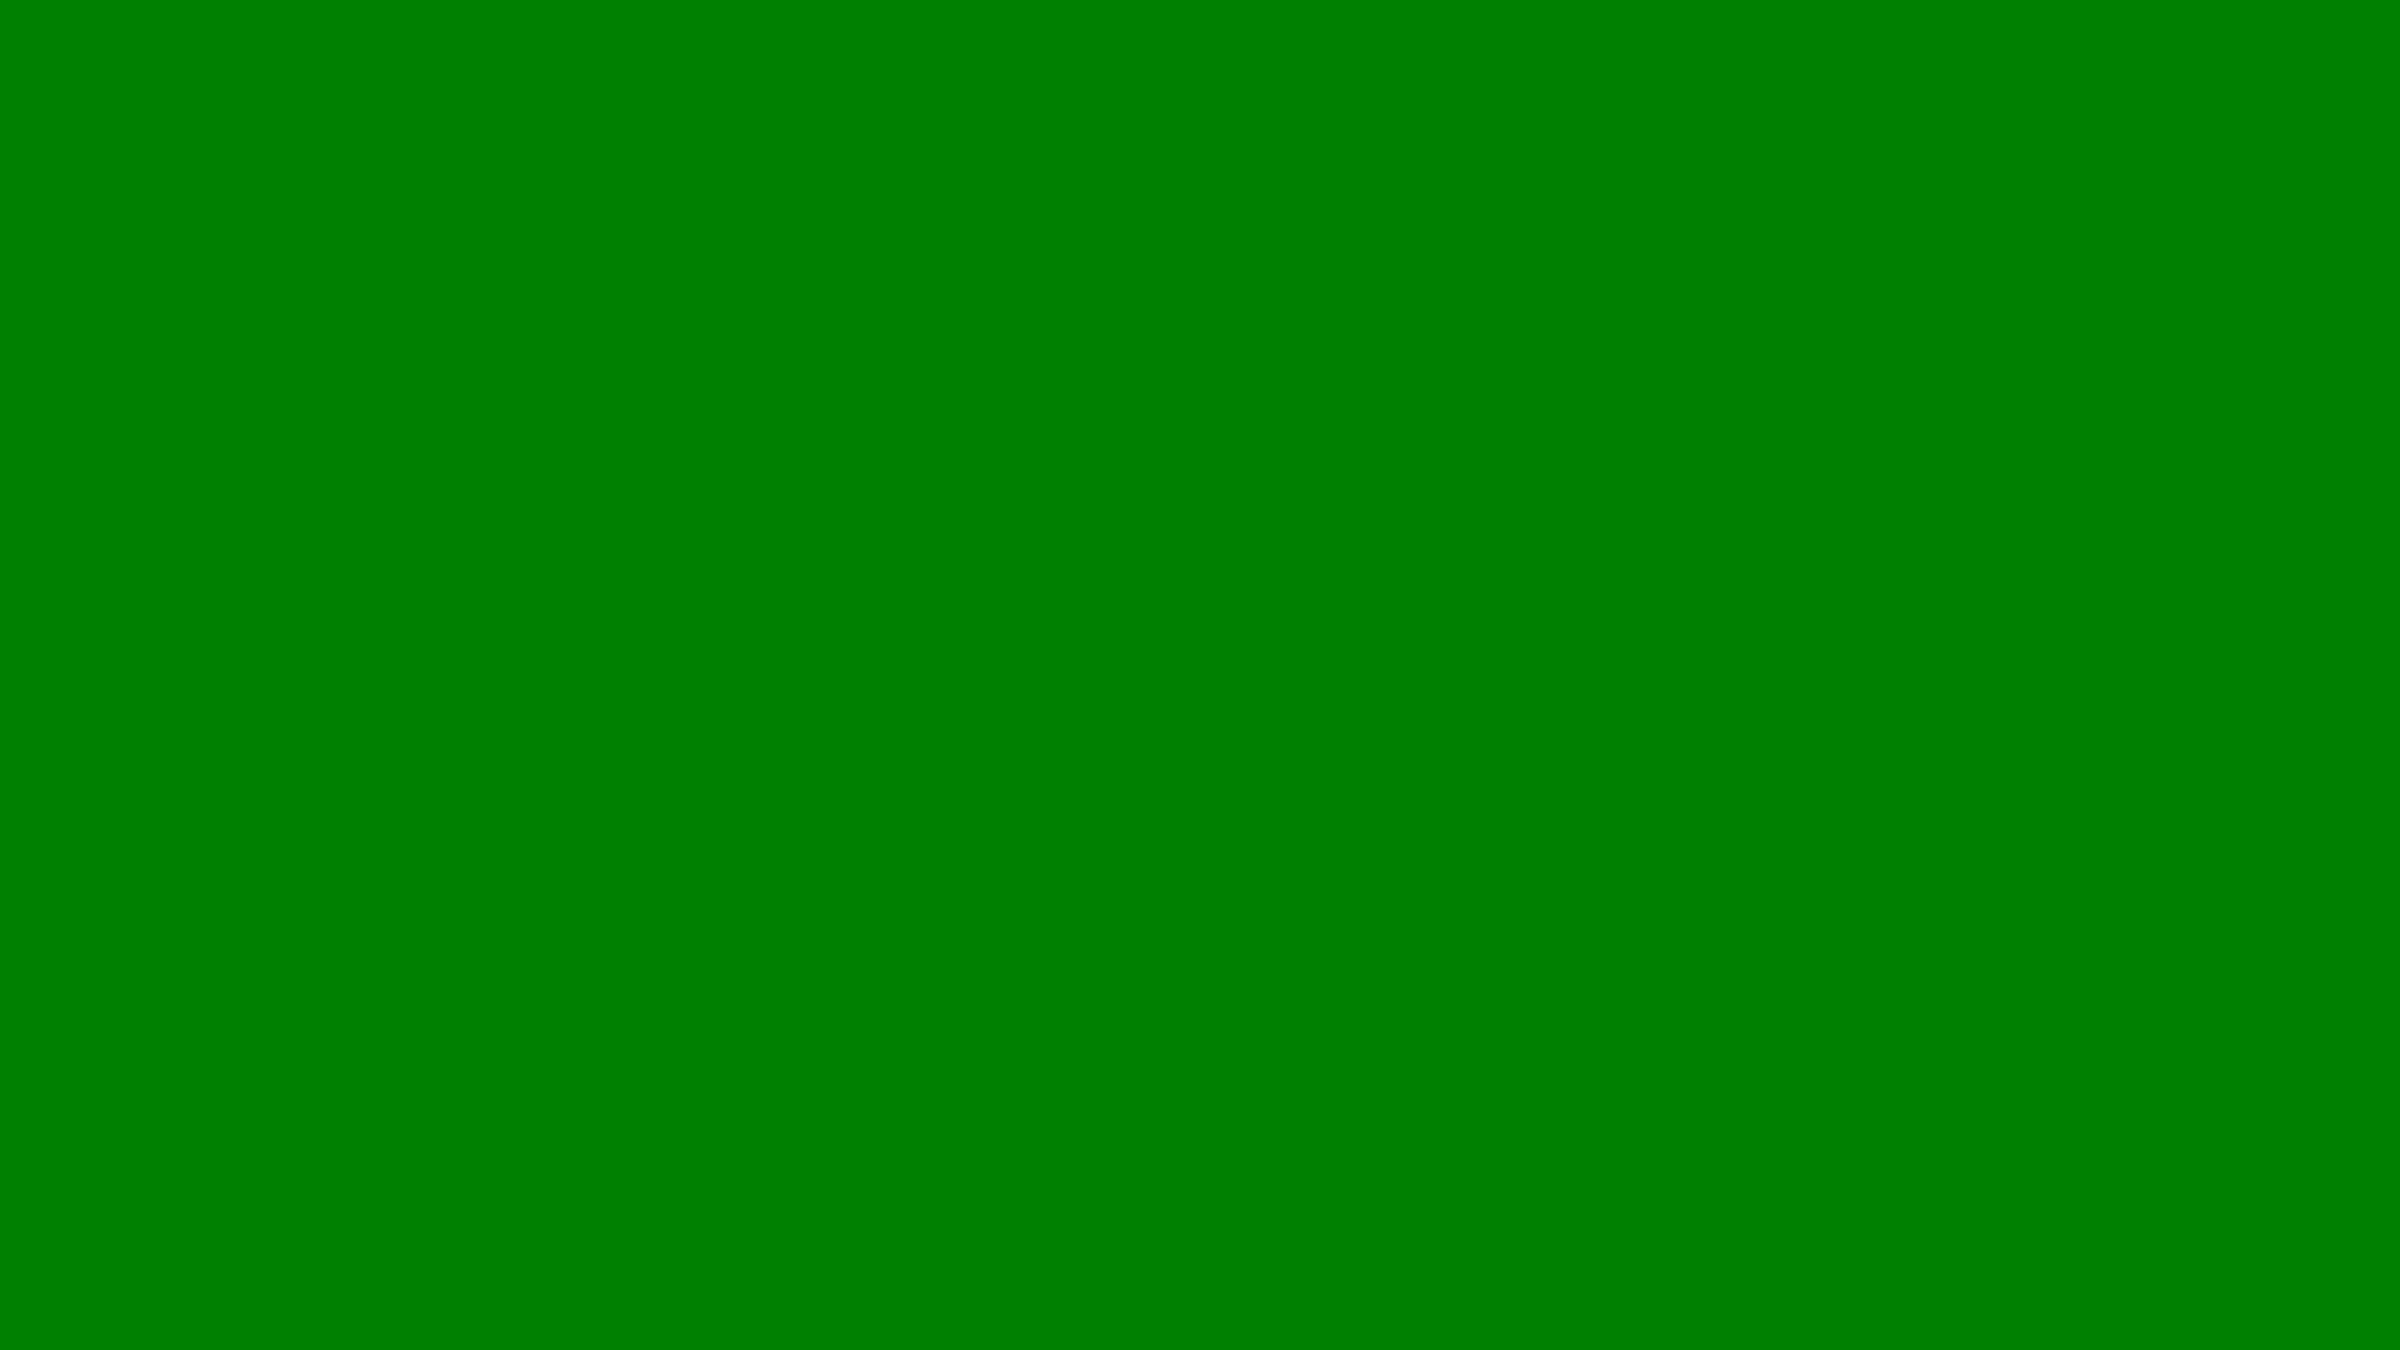 fond d'écran vert,vert,herbe,feuille,jaune,gazon artificiel